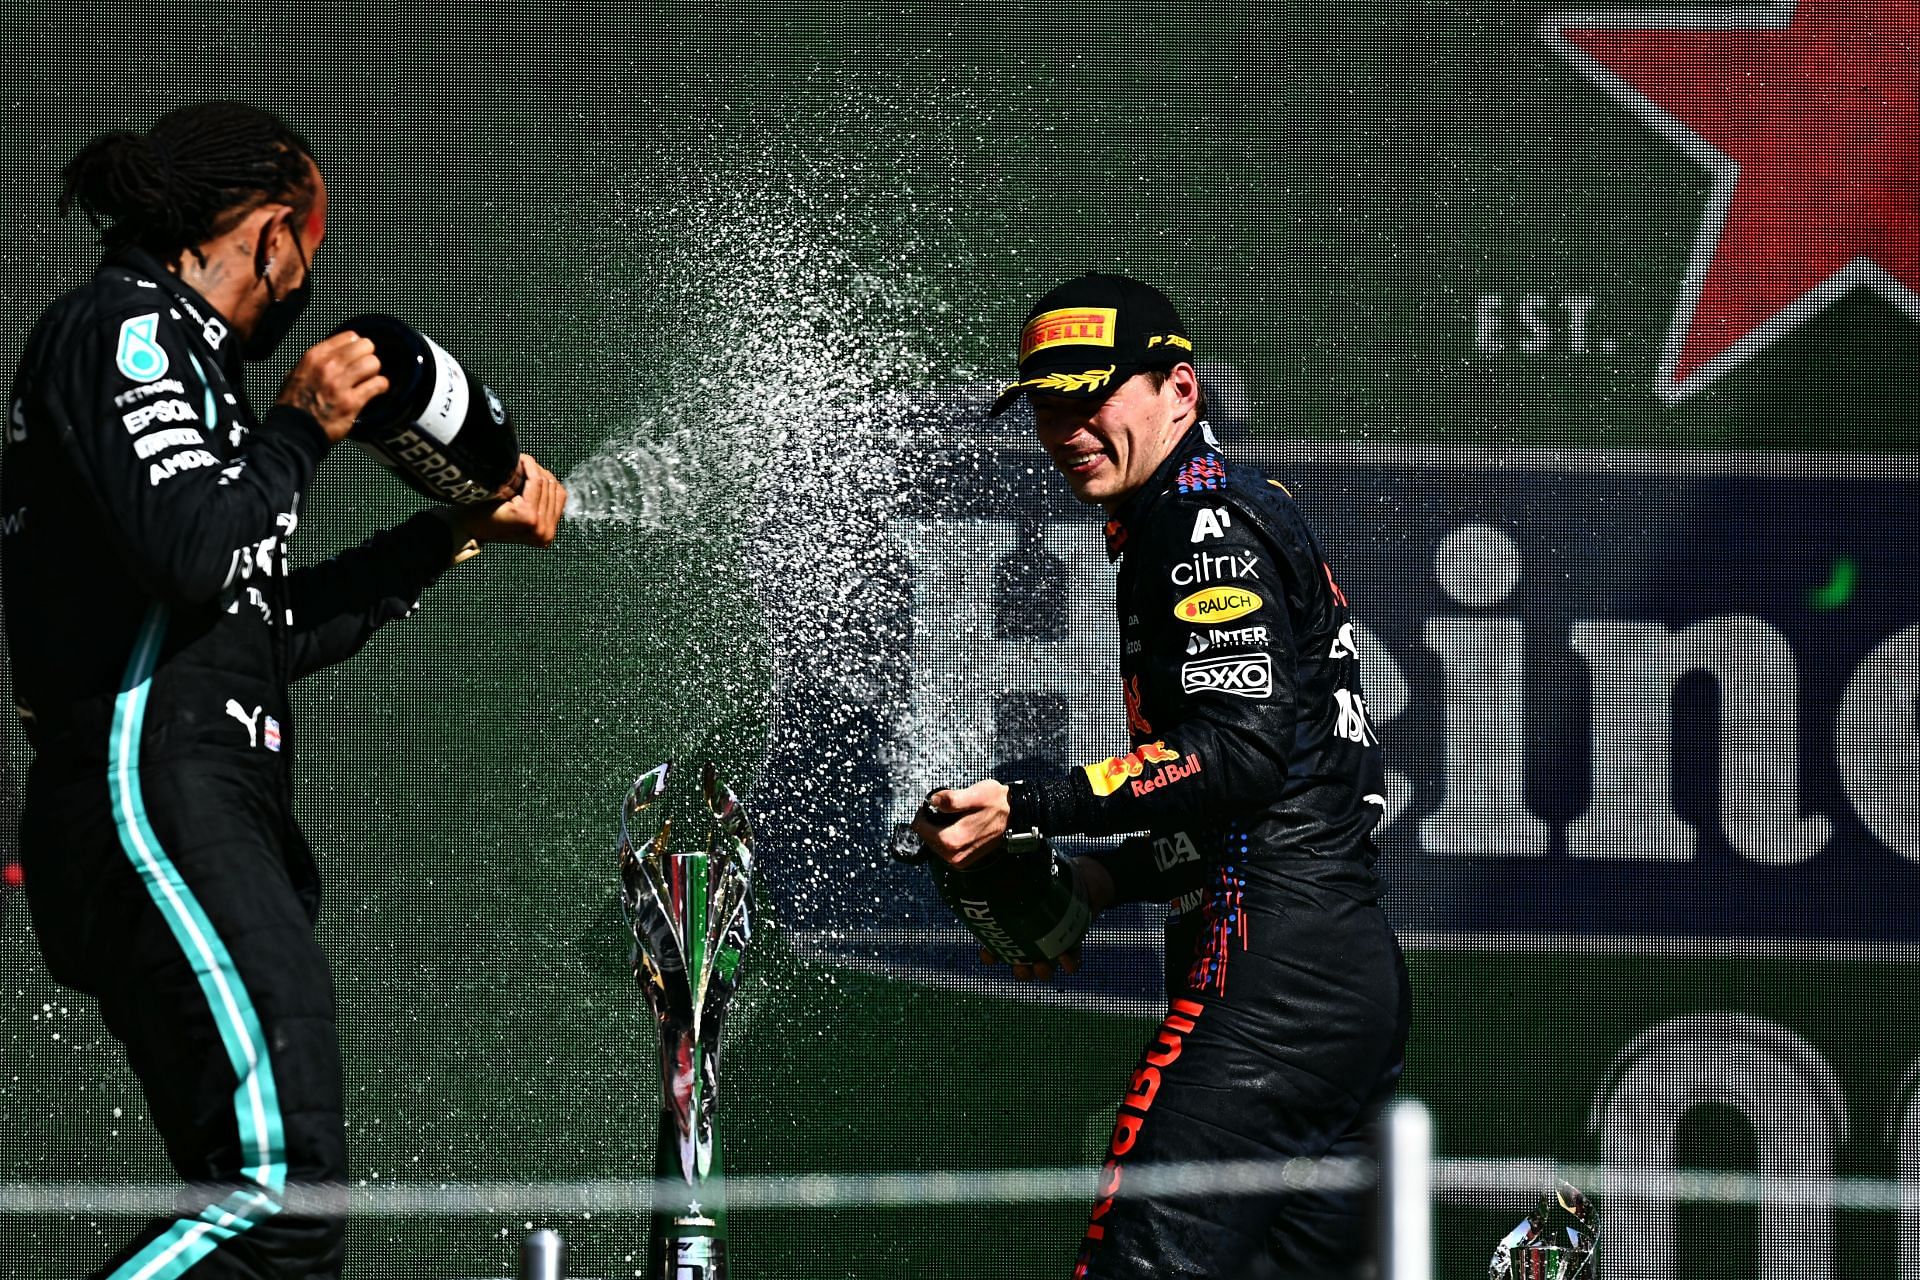 F1 Grand Prix of Mexico - Lewis Hamilton and Max Verstappen